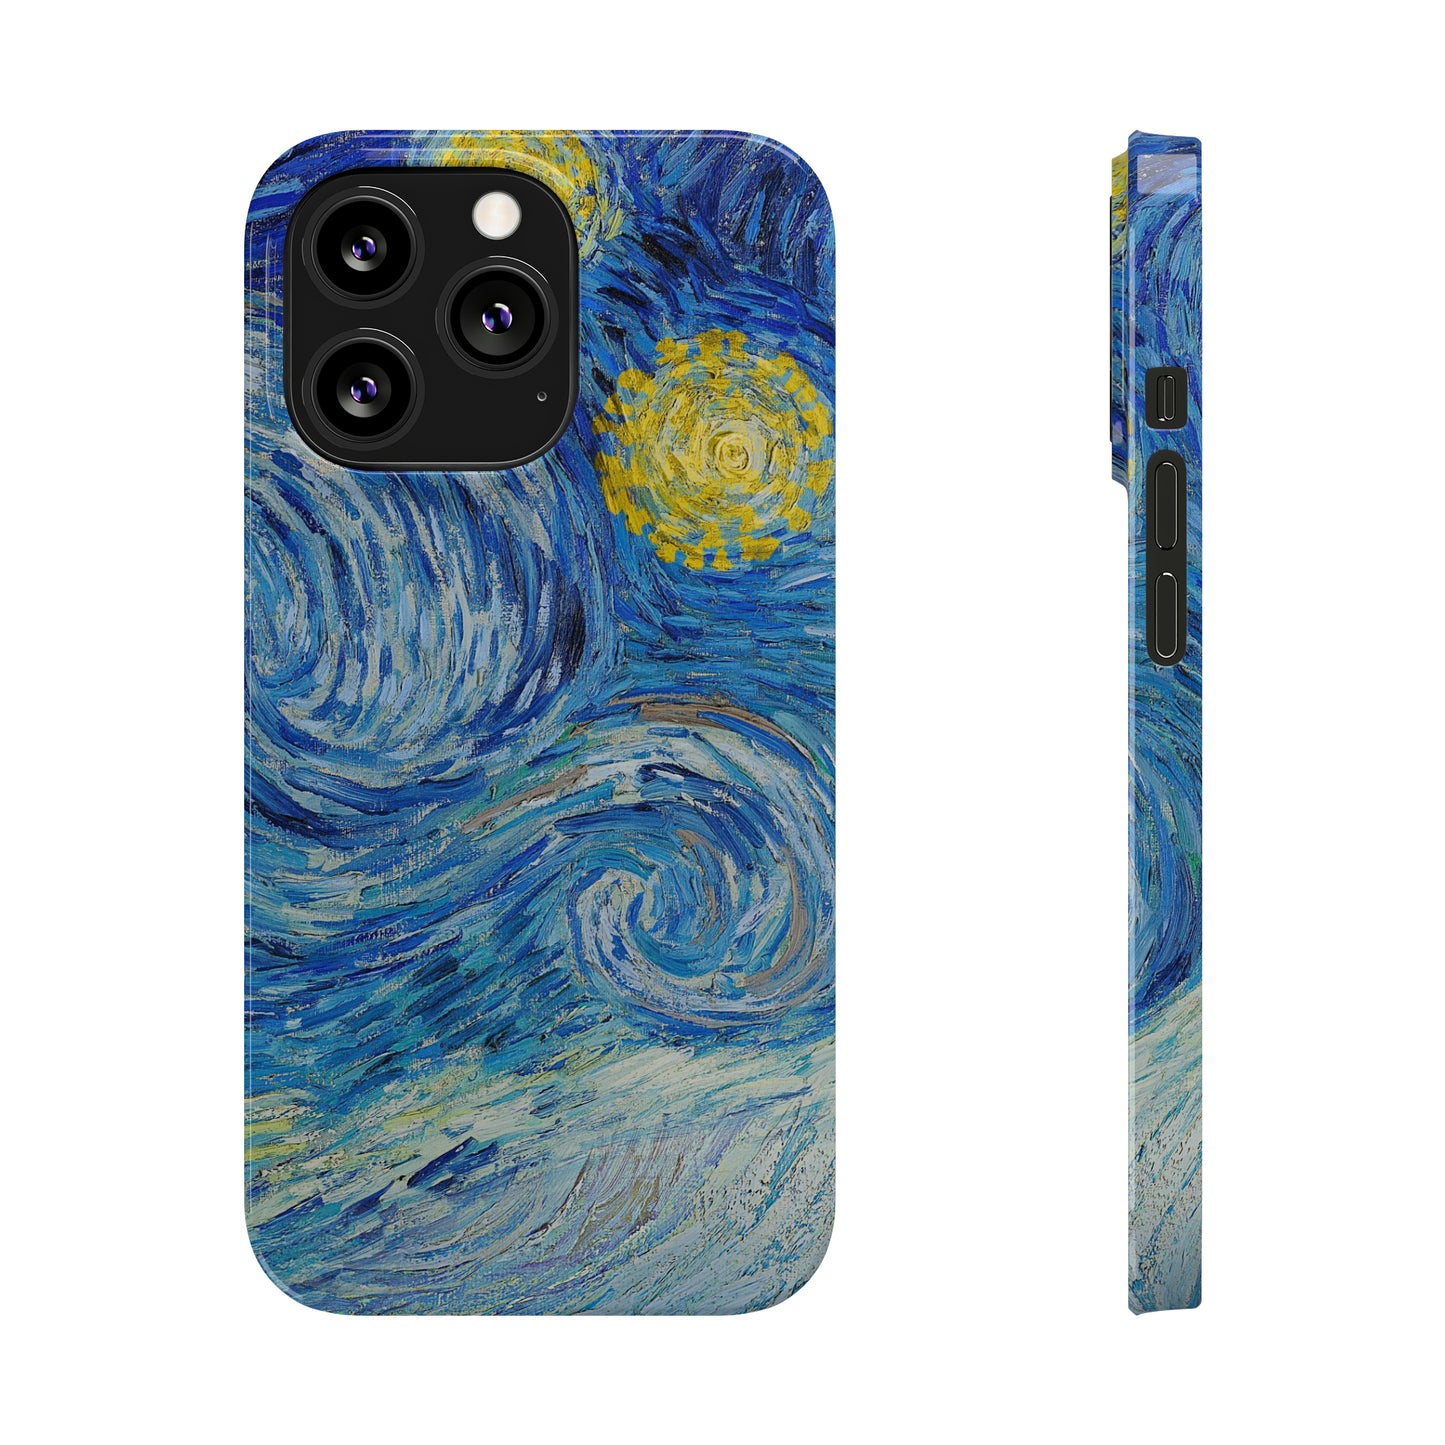 Van Gogh iPhone case